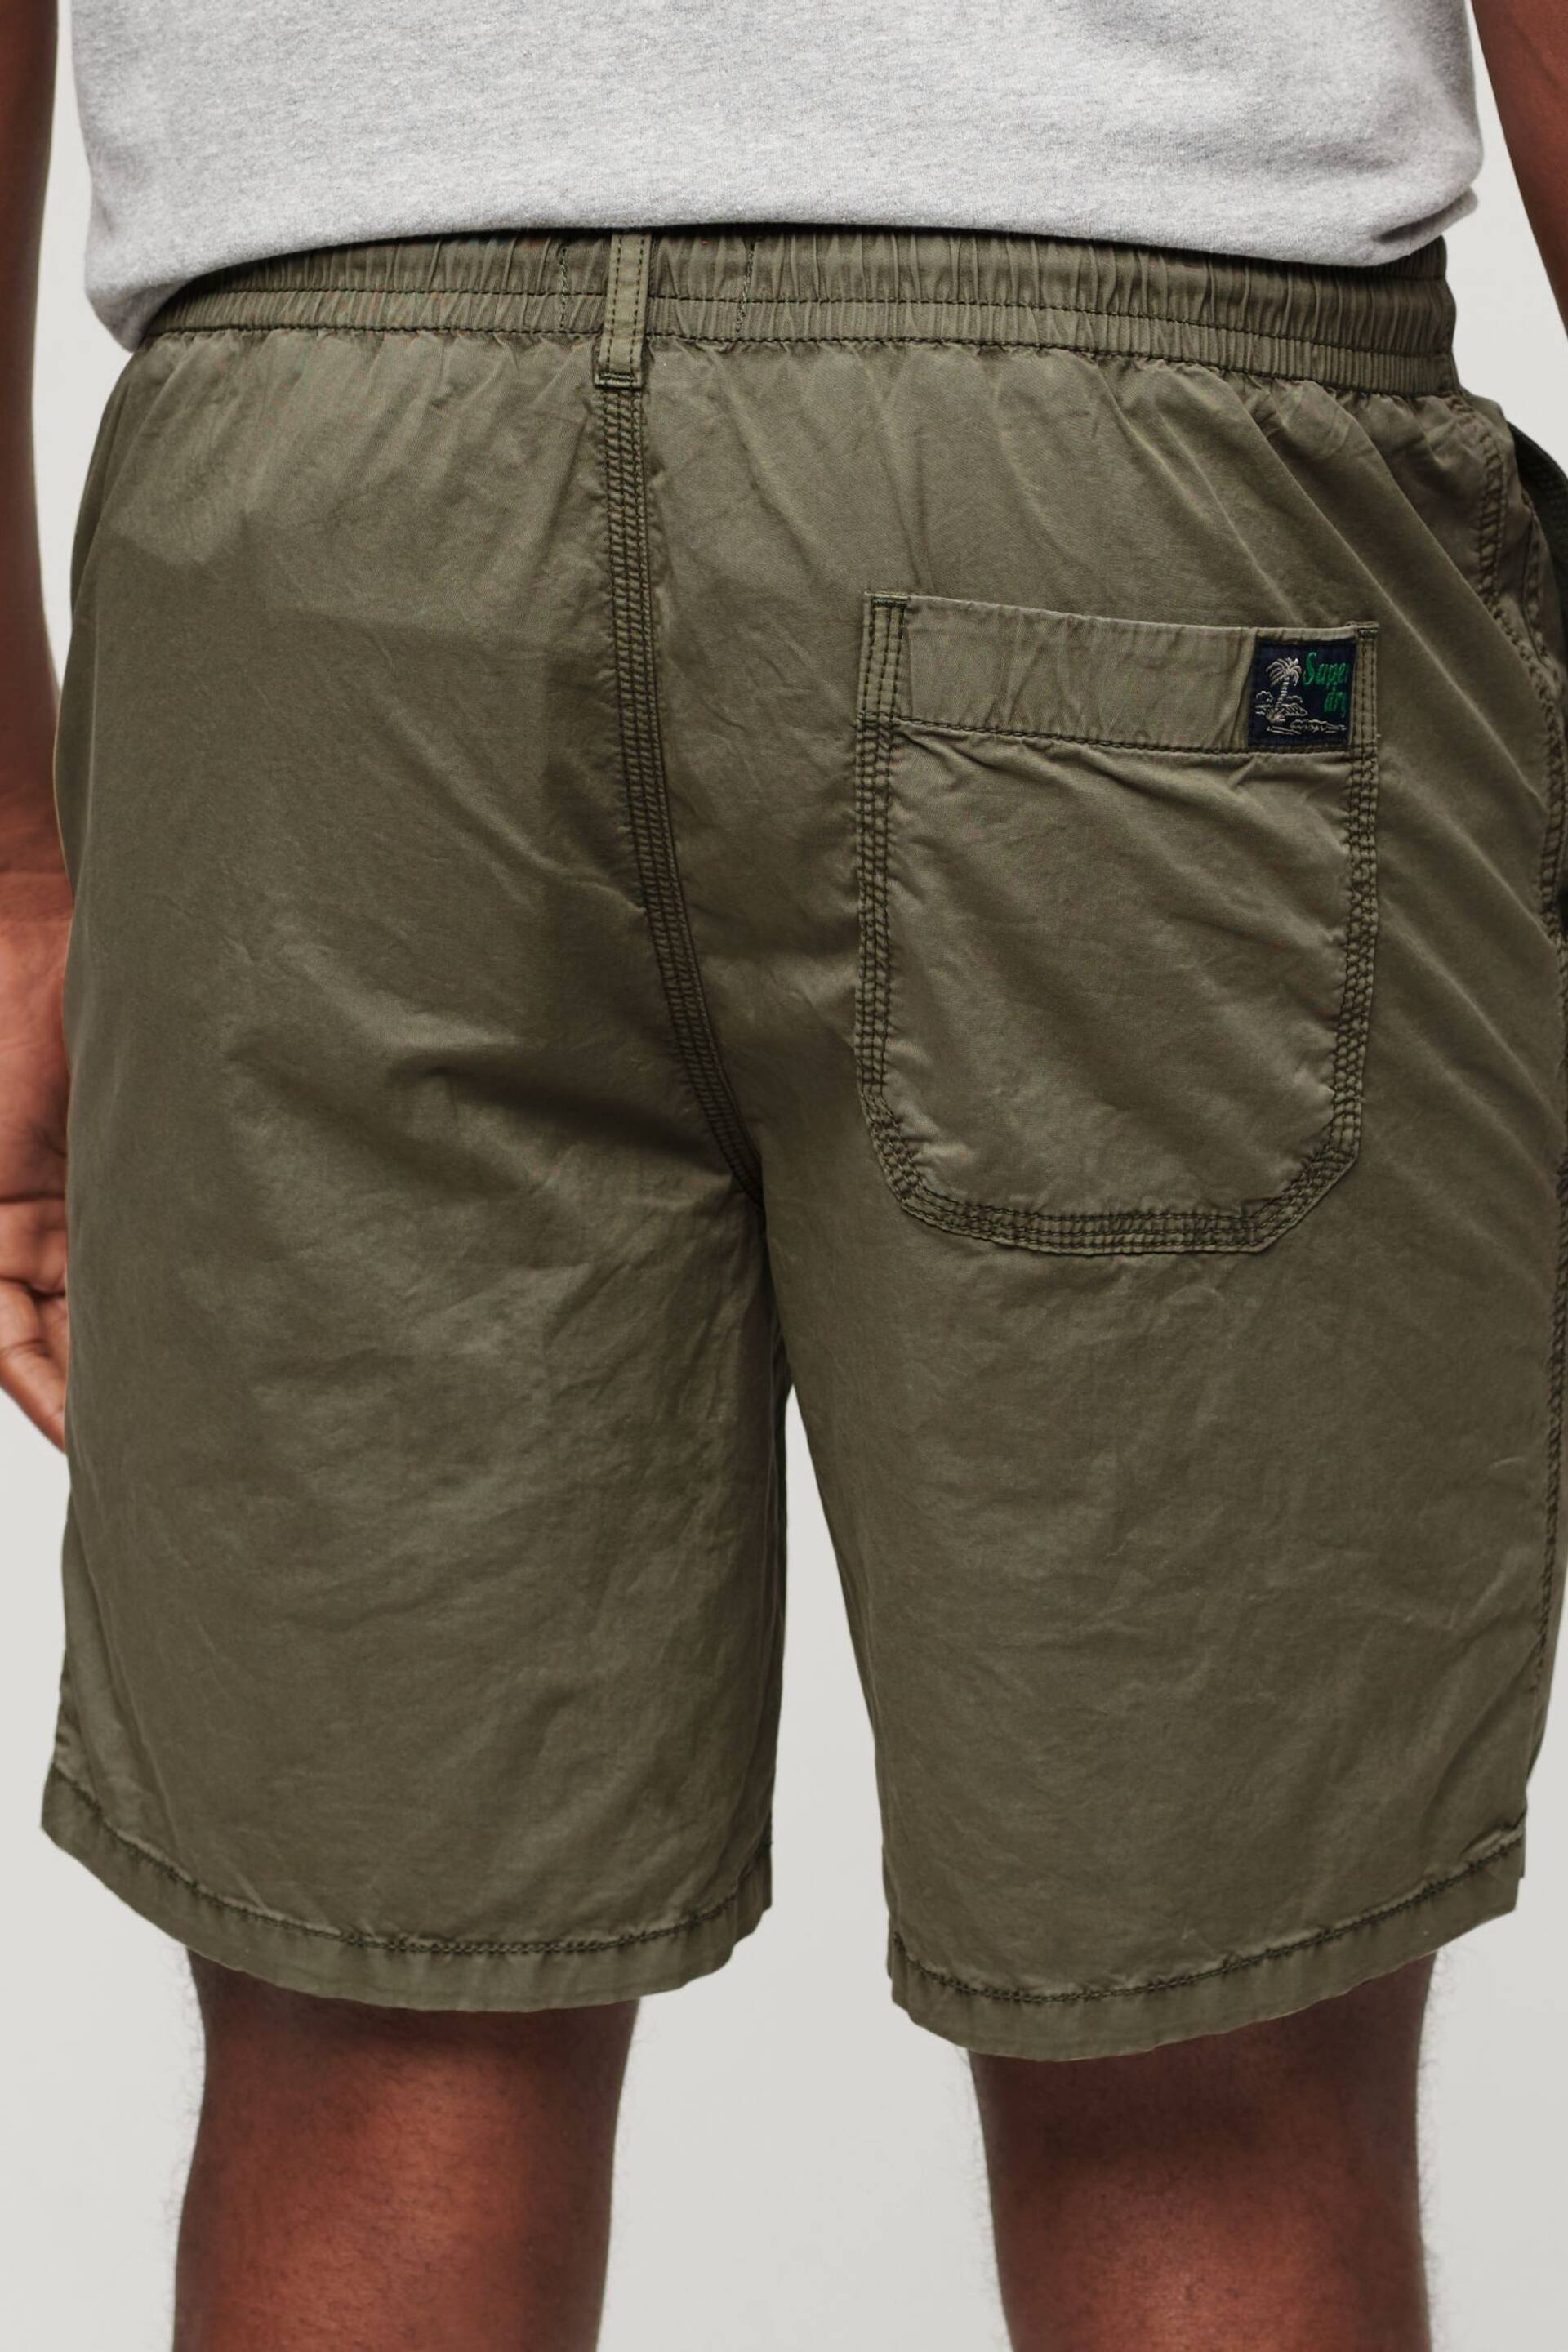 Superdry Green Walk Shorts - Image 3 of 7